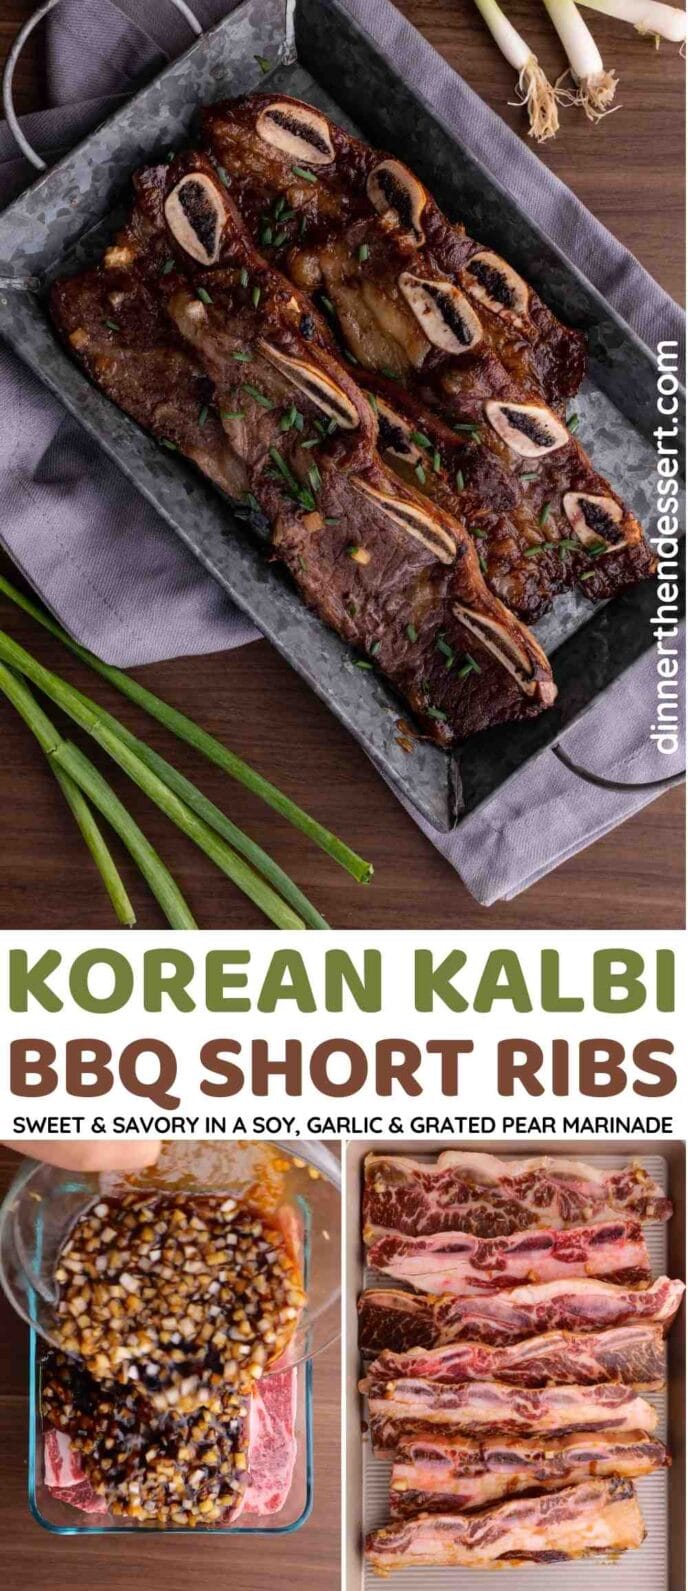 Korean Kalbi BBQ Short Ribs Collage